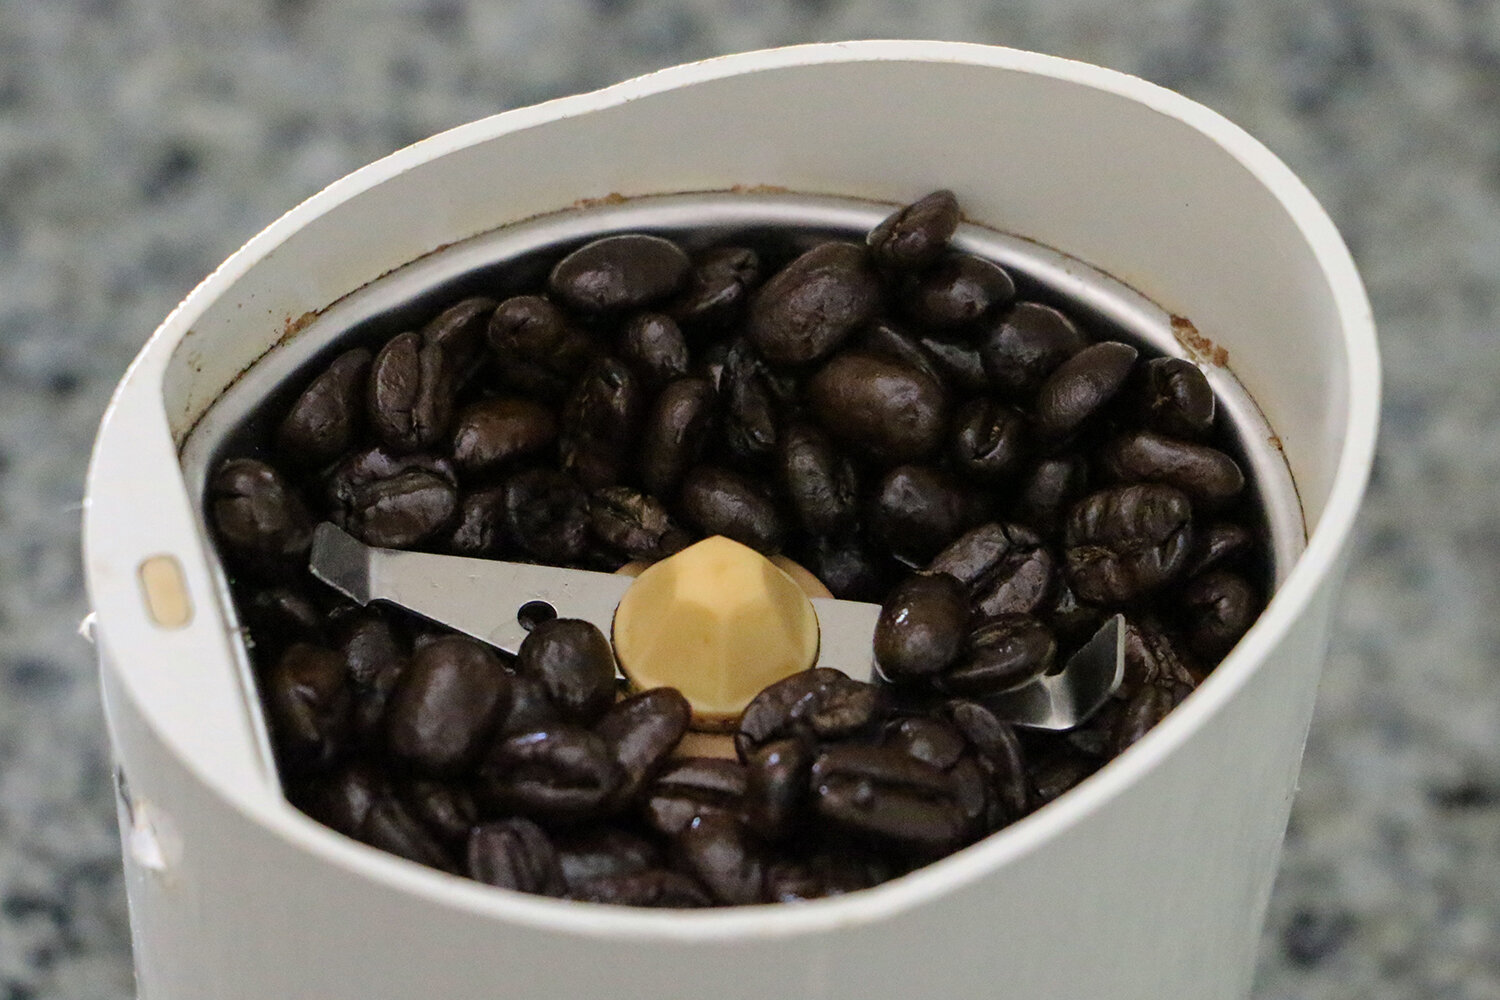 Grind fresh coffee beans